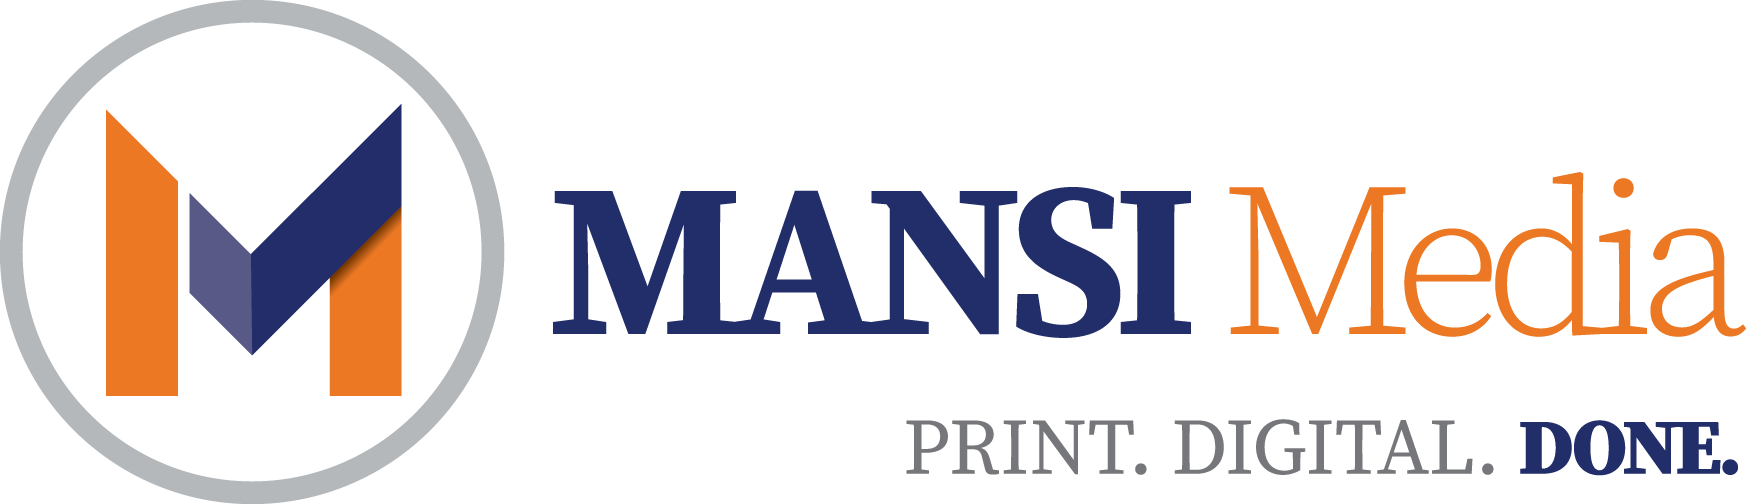 MANSI Media Logo cmyk Horizontal